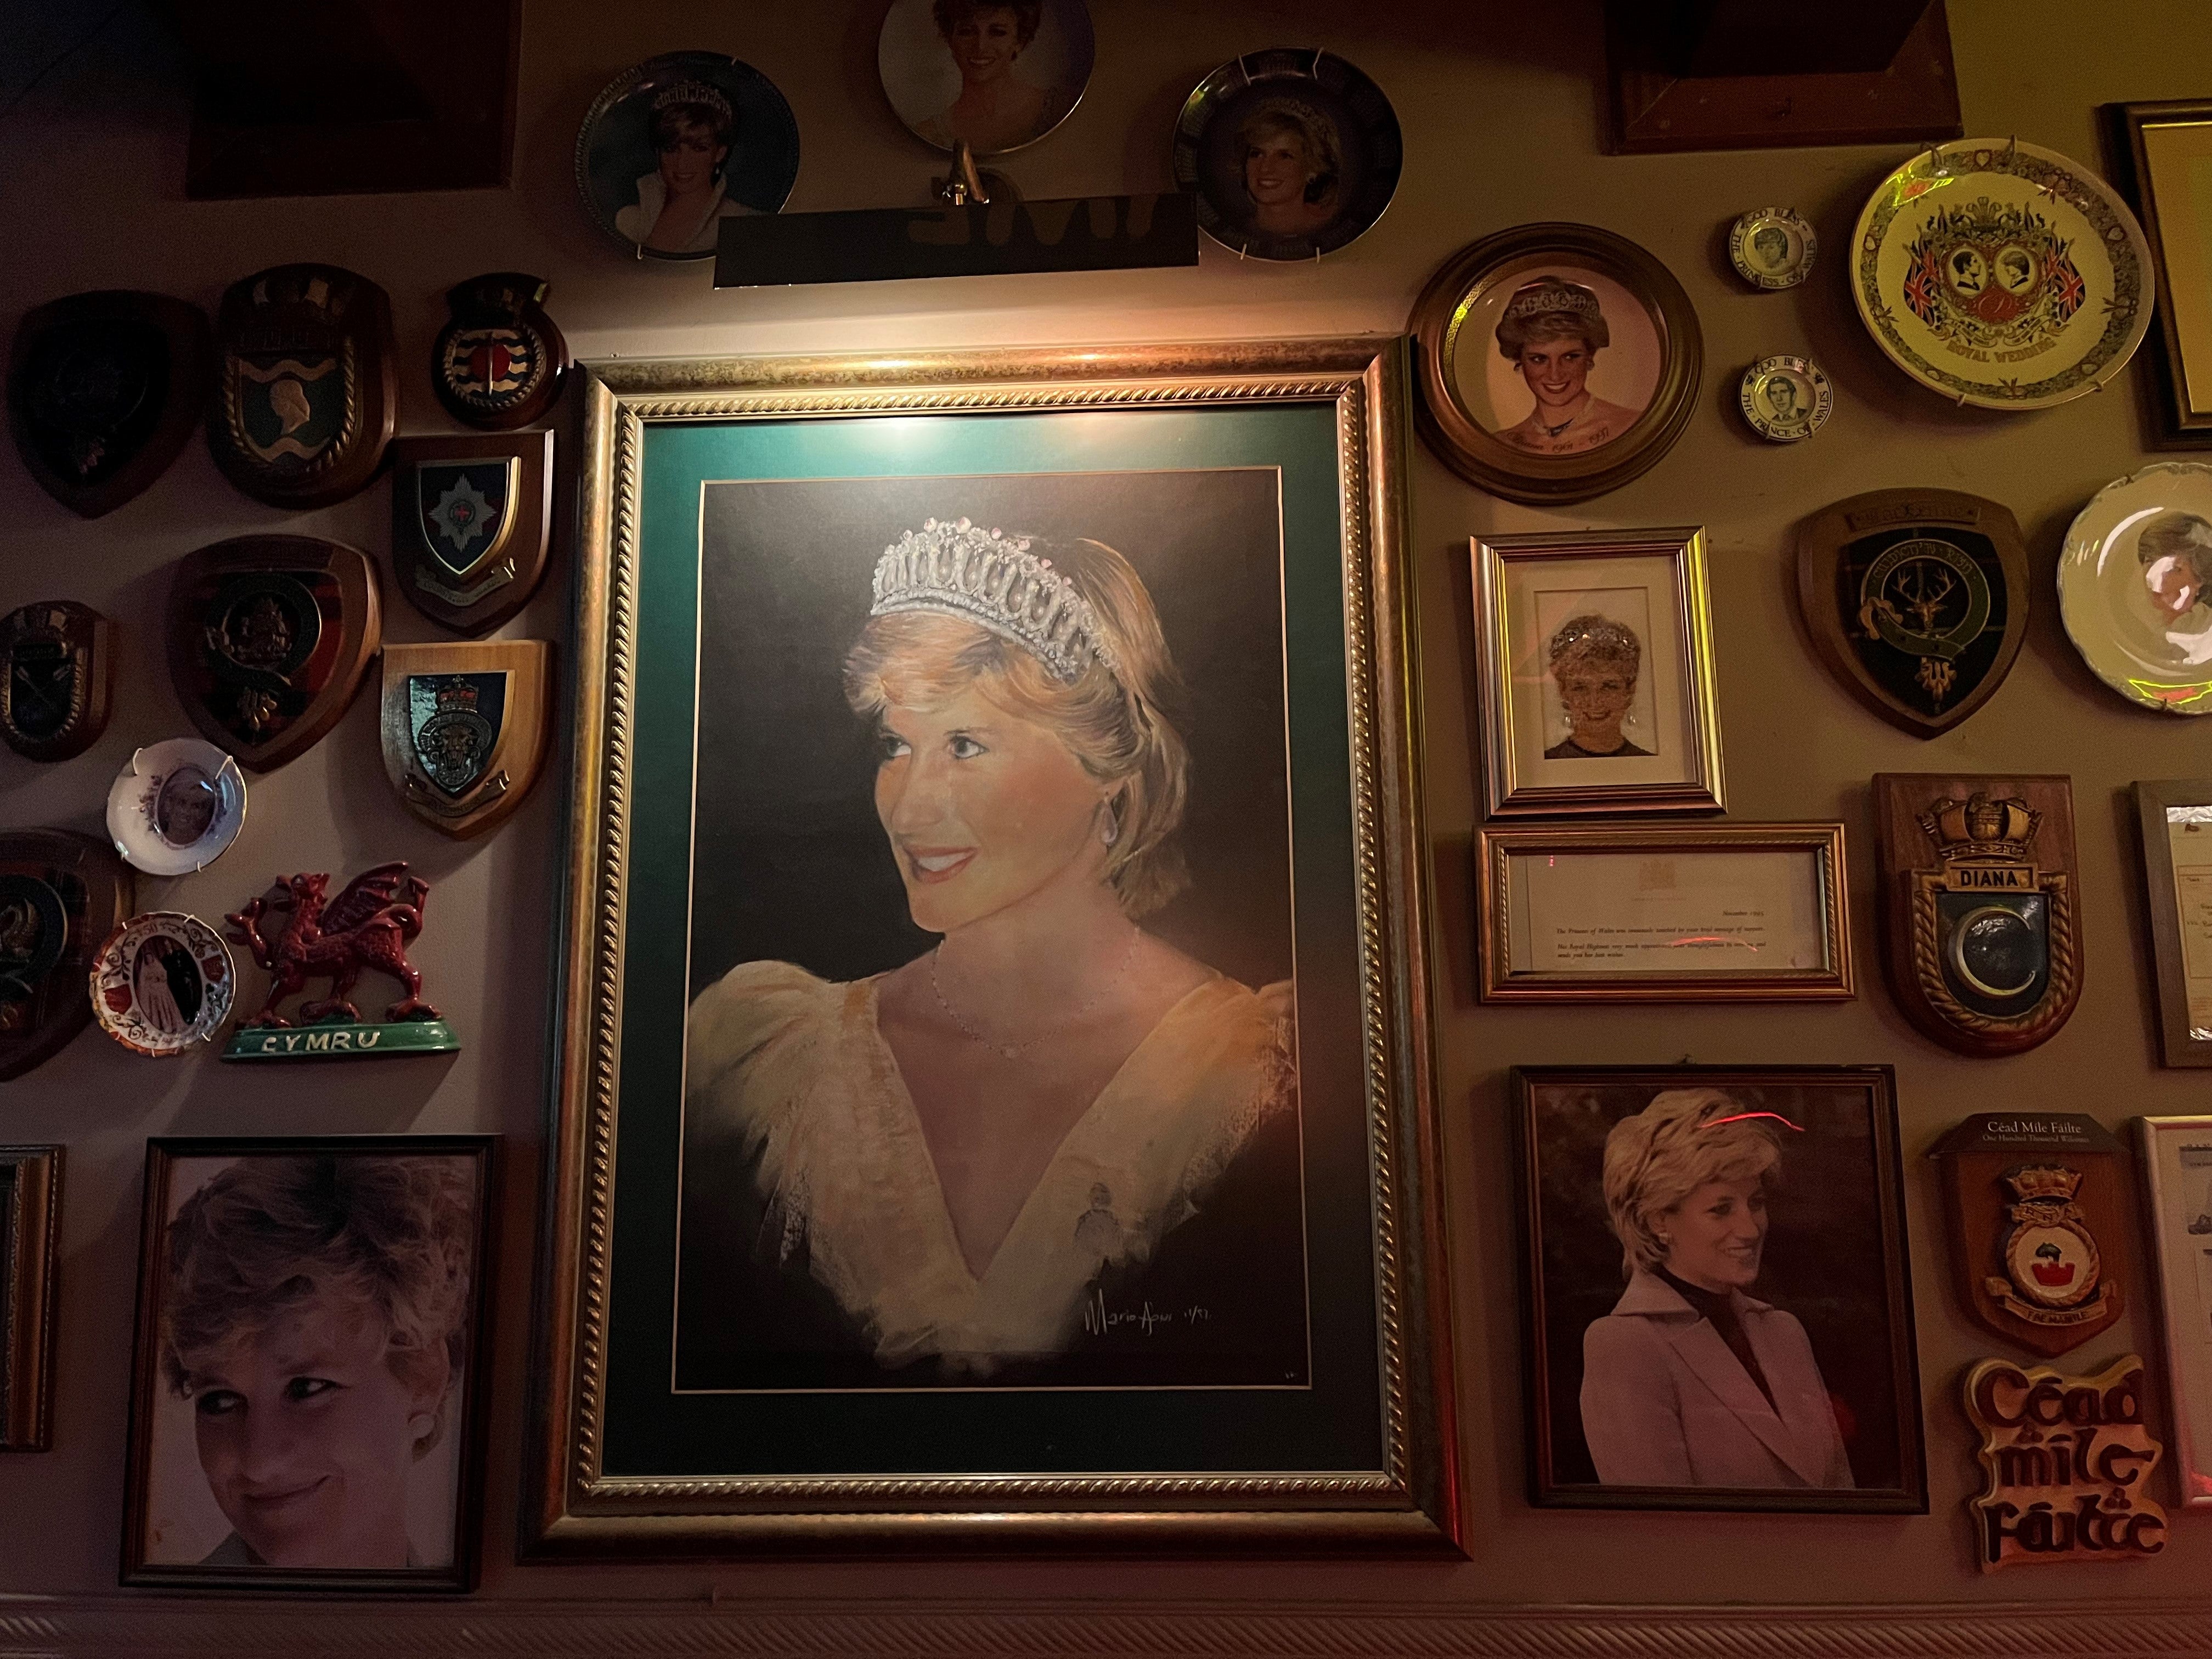 This Qawra pub is plastered with Lady Di memorabilia